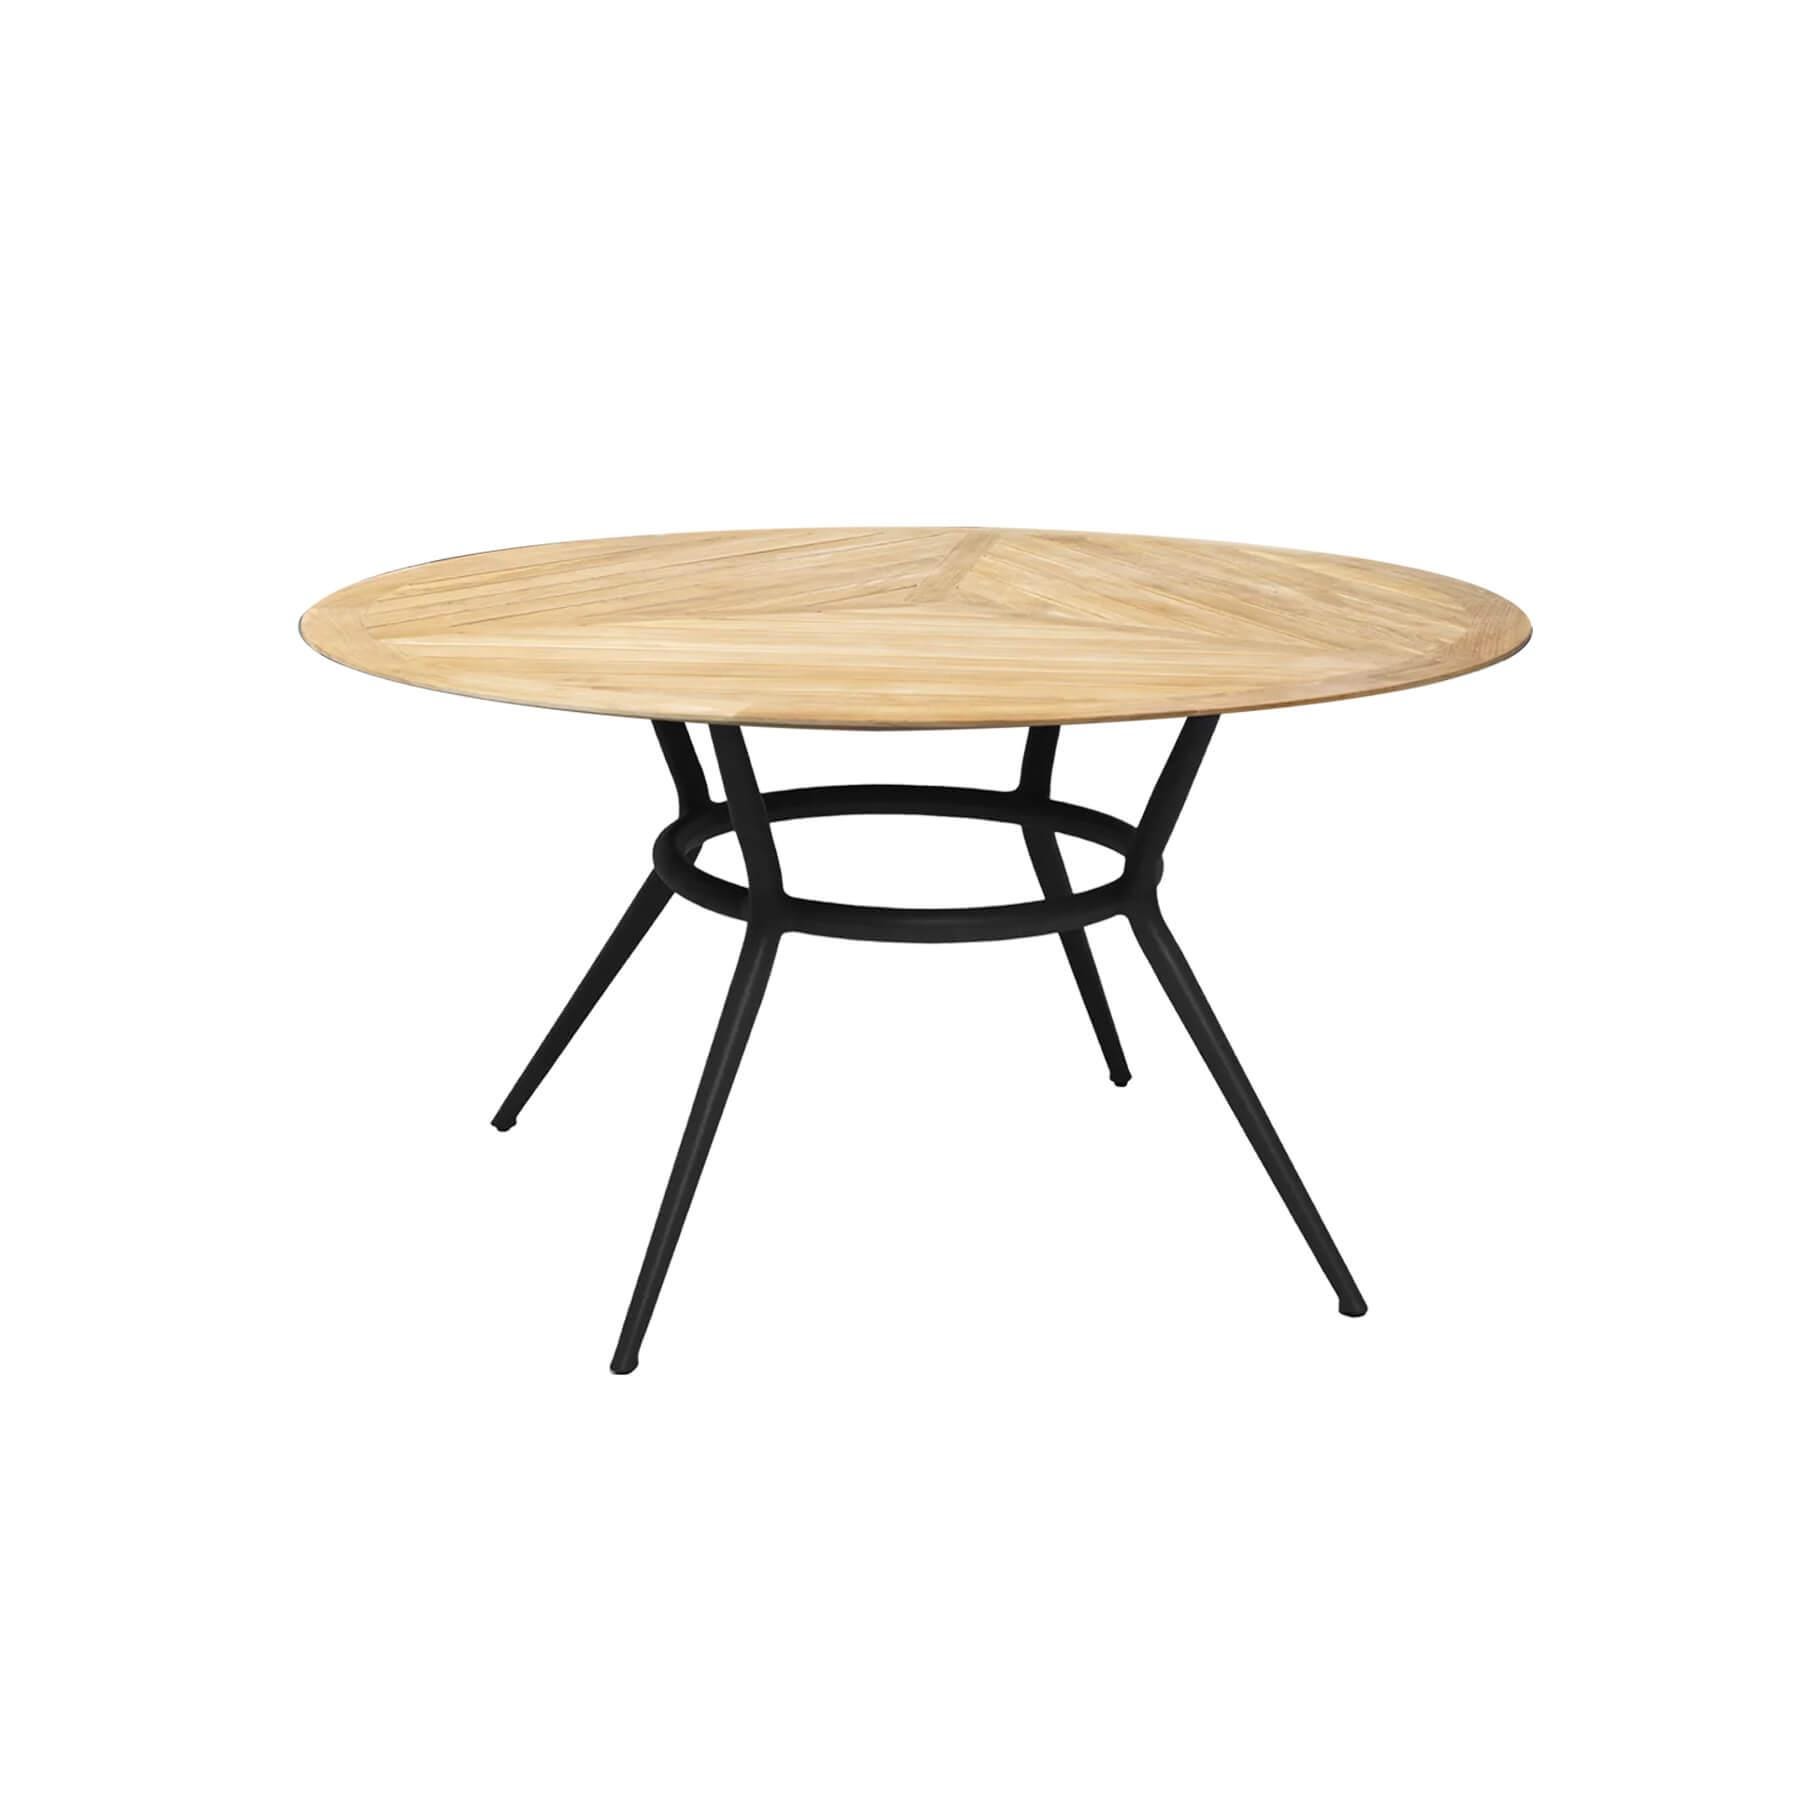 Caneline Joy Outdoor Dining Table Round Small Teak Top Lava Grey Legs Light Wood